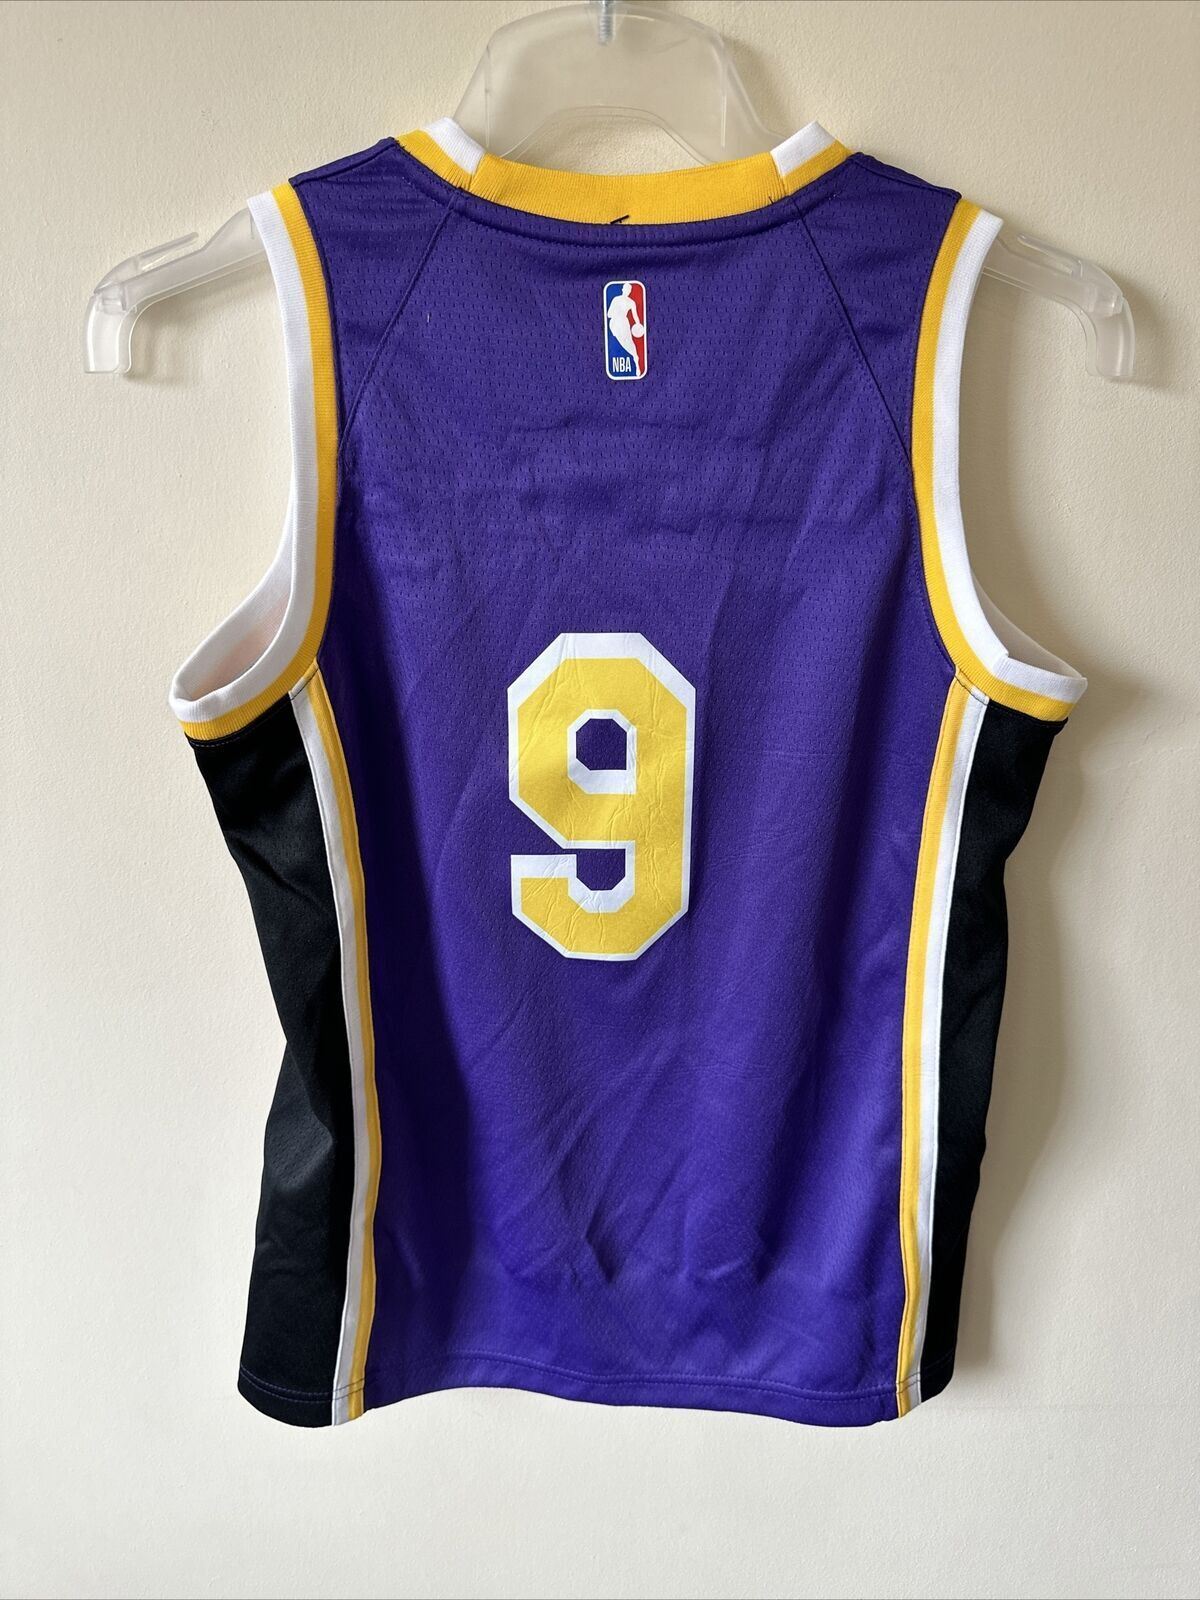 Nike NBA LA Lakers Swingman Jersey ‘9’ Basketball Youth 10-12 Years